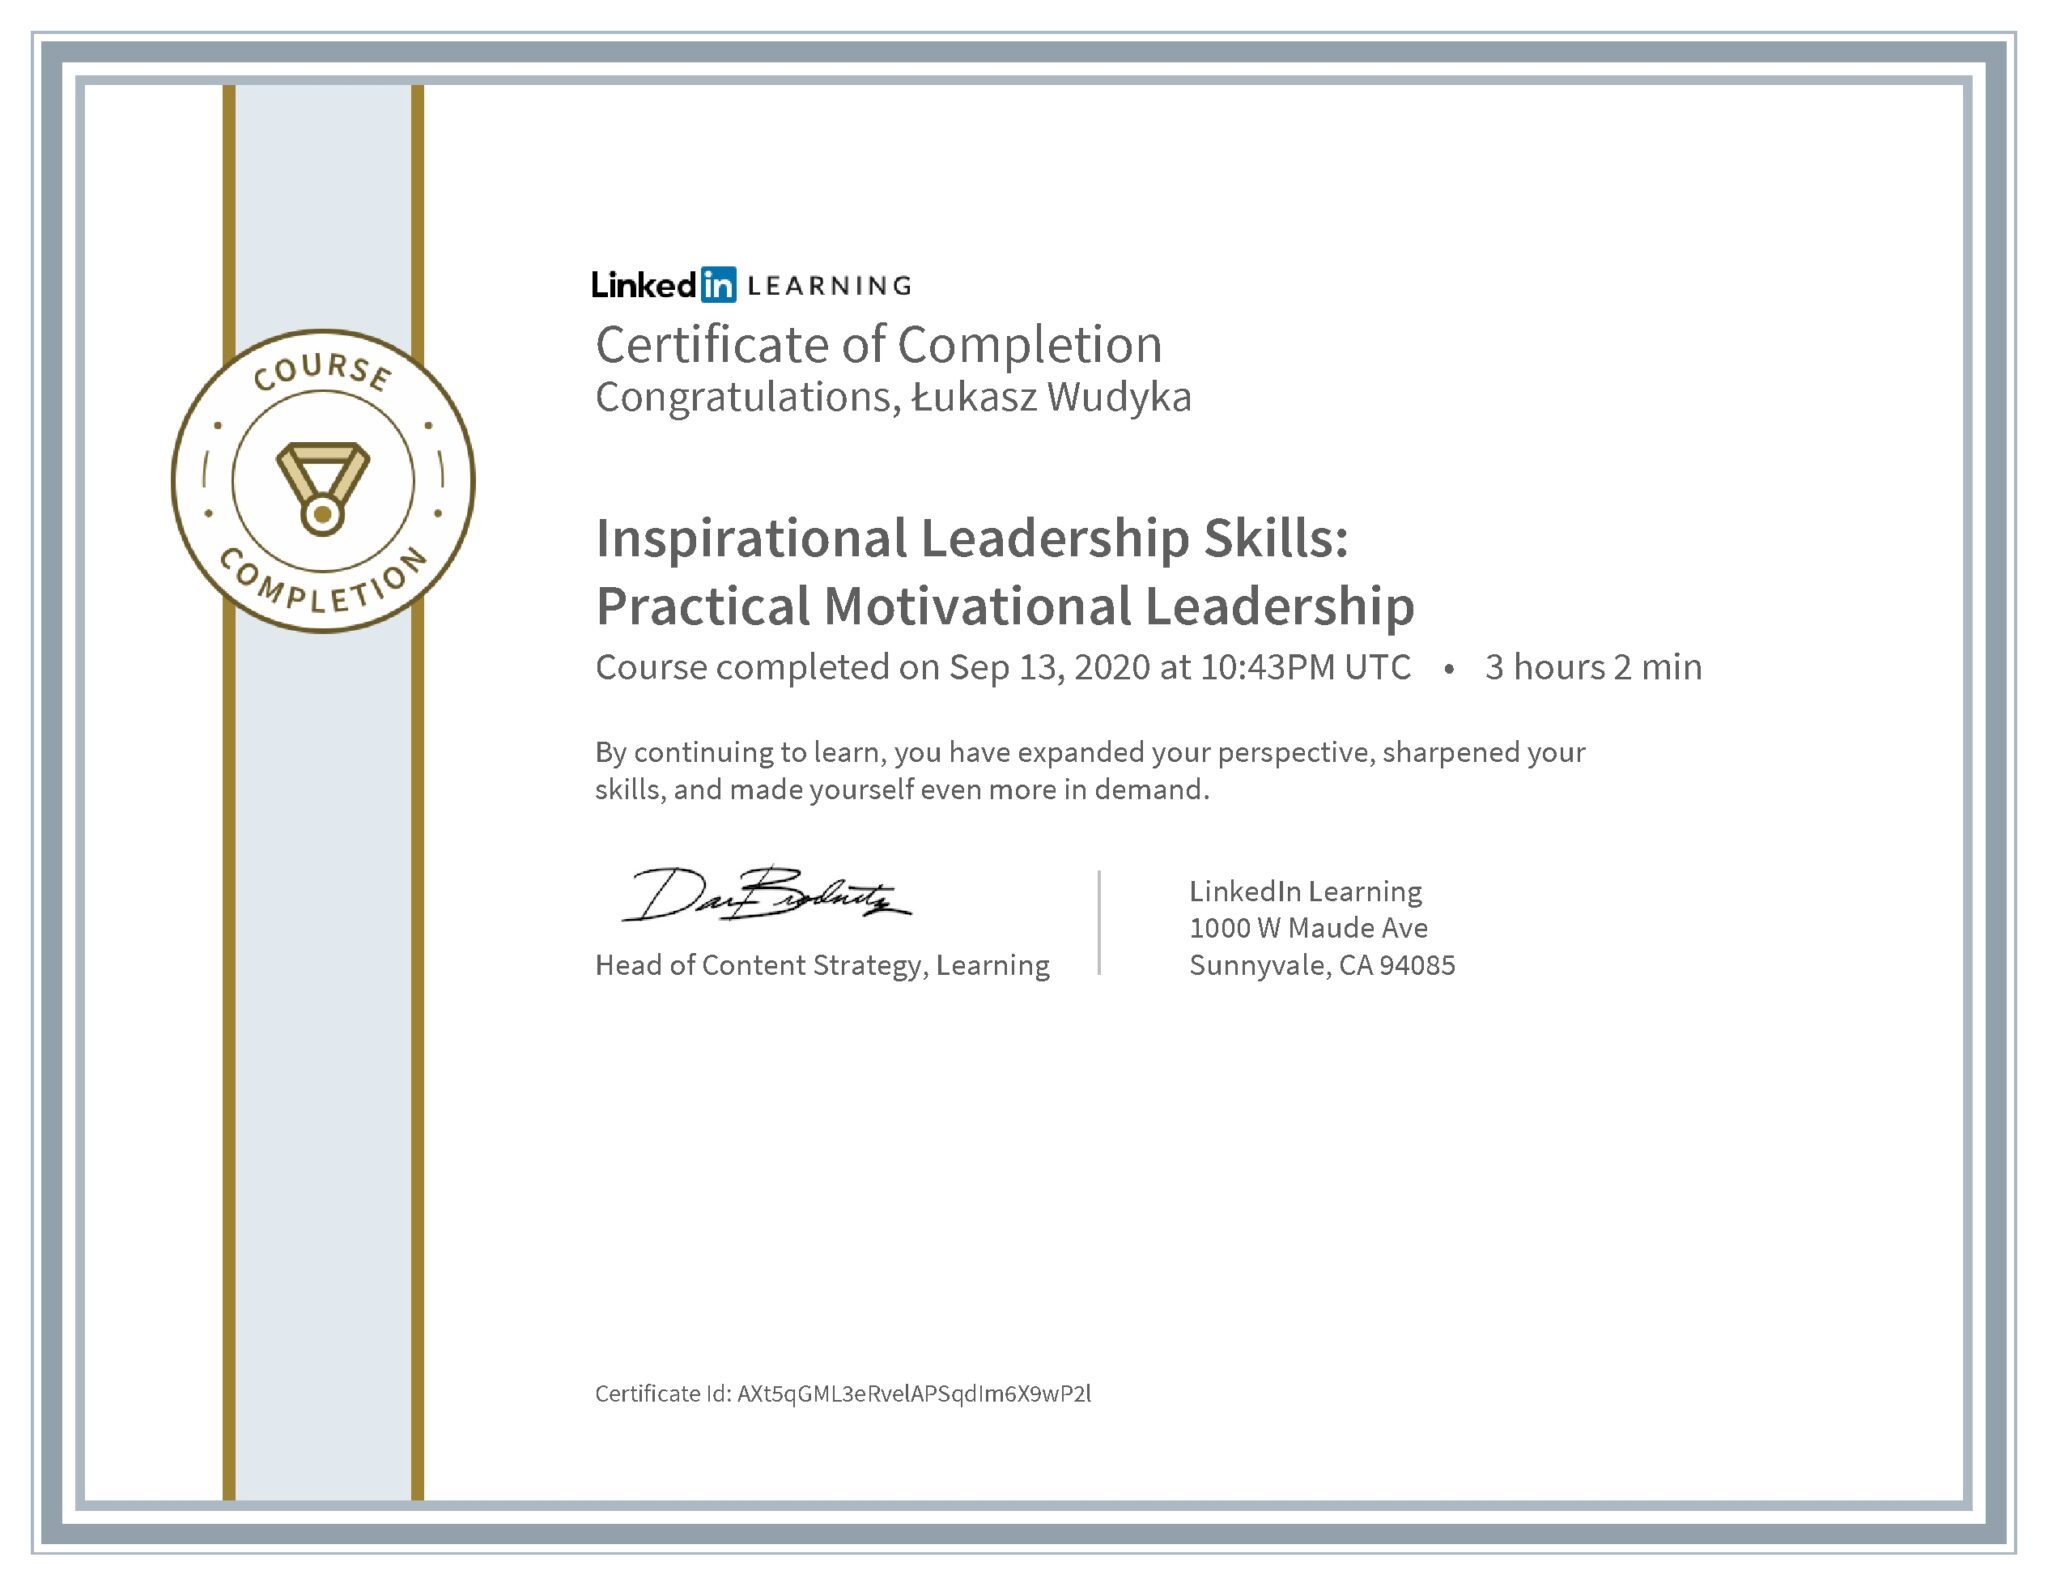 Łukasz Wudyka certyfikat LinkedIn Inspirational Leadership Skills: Practical Motivational Leadership